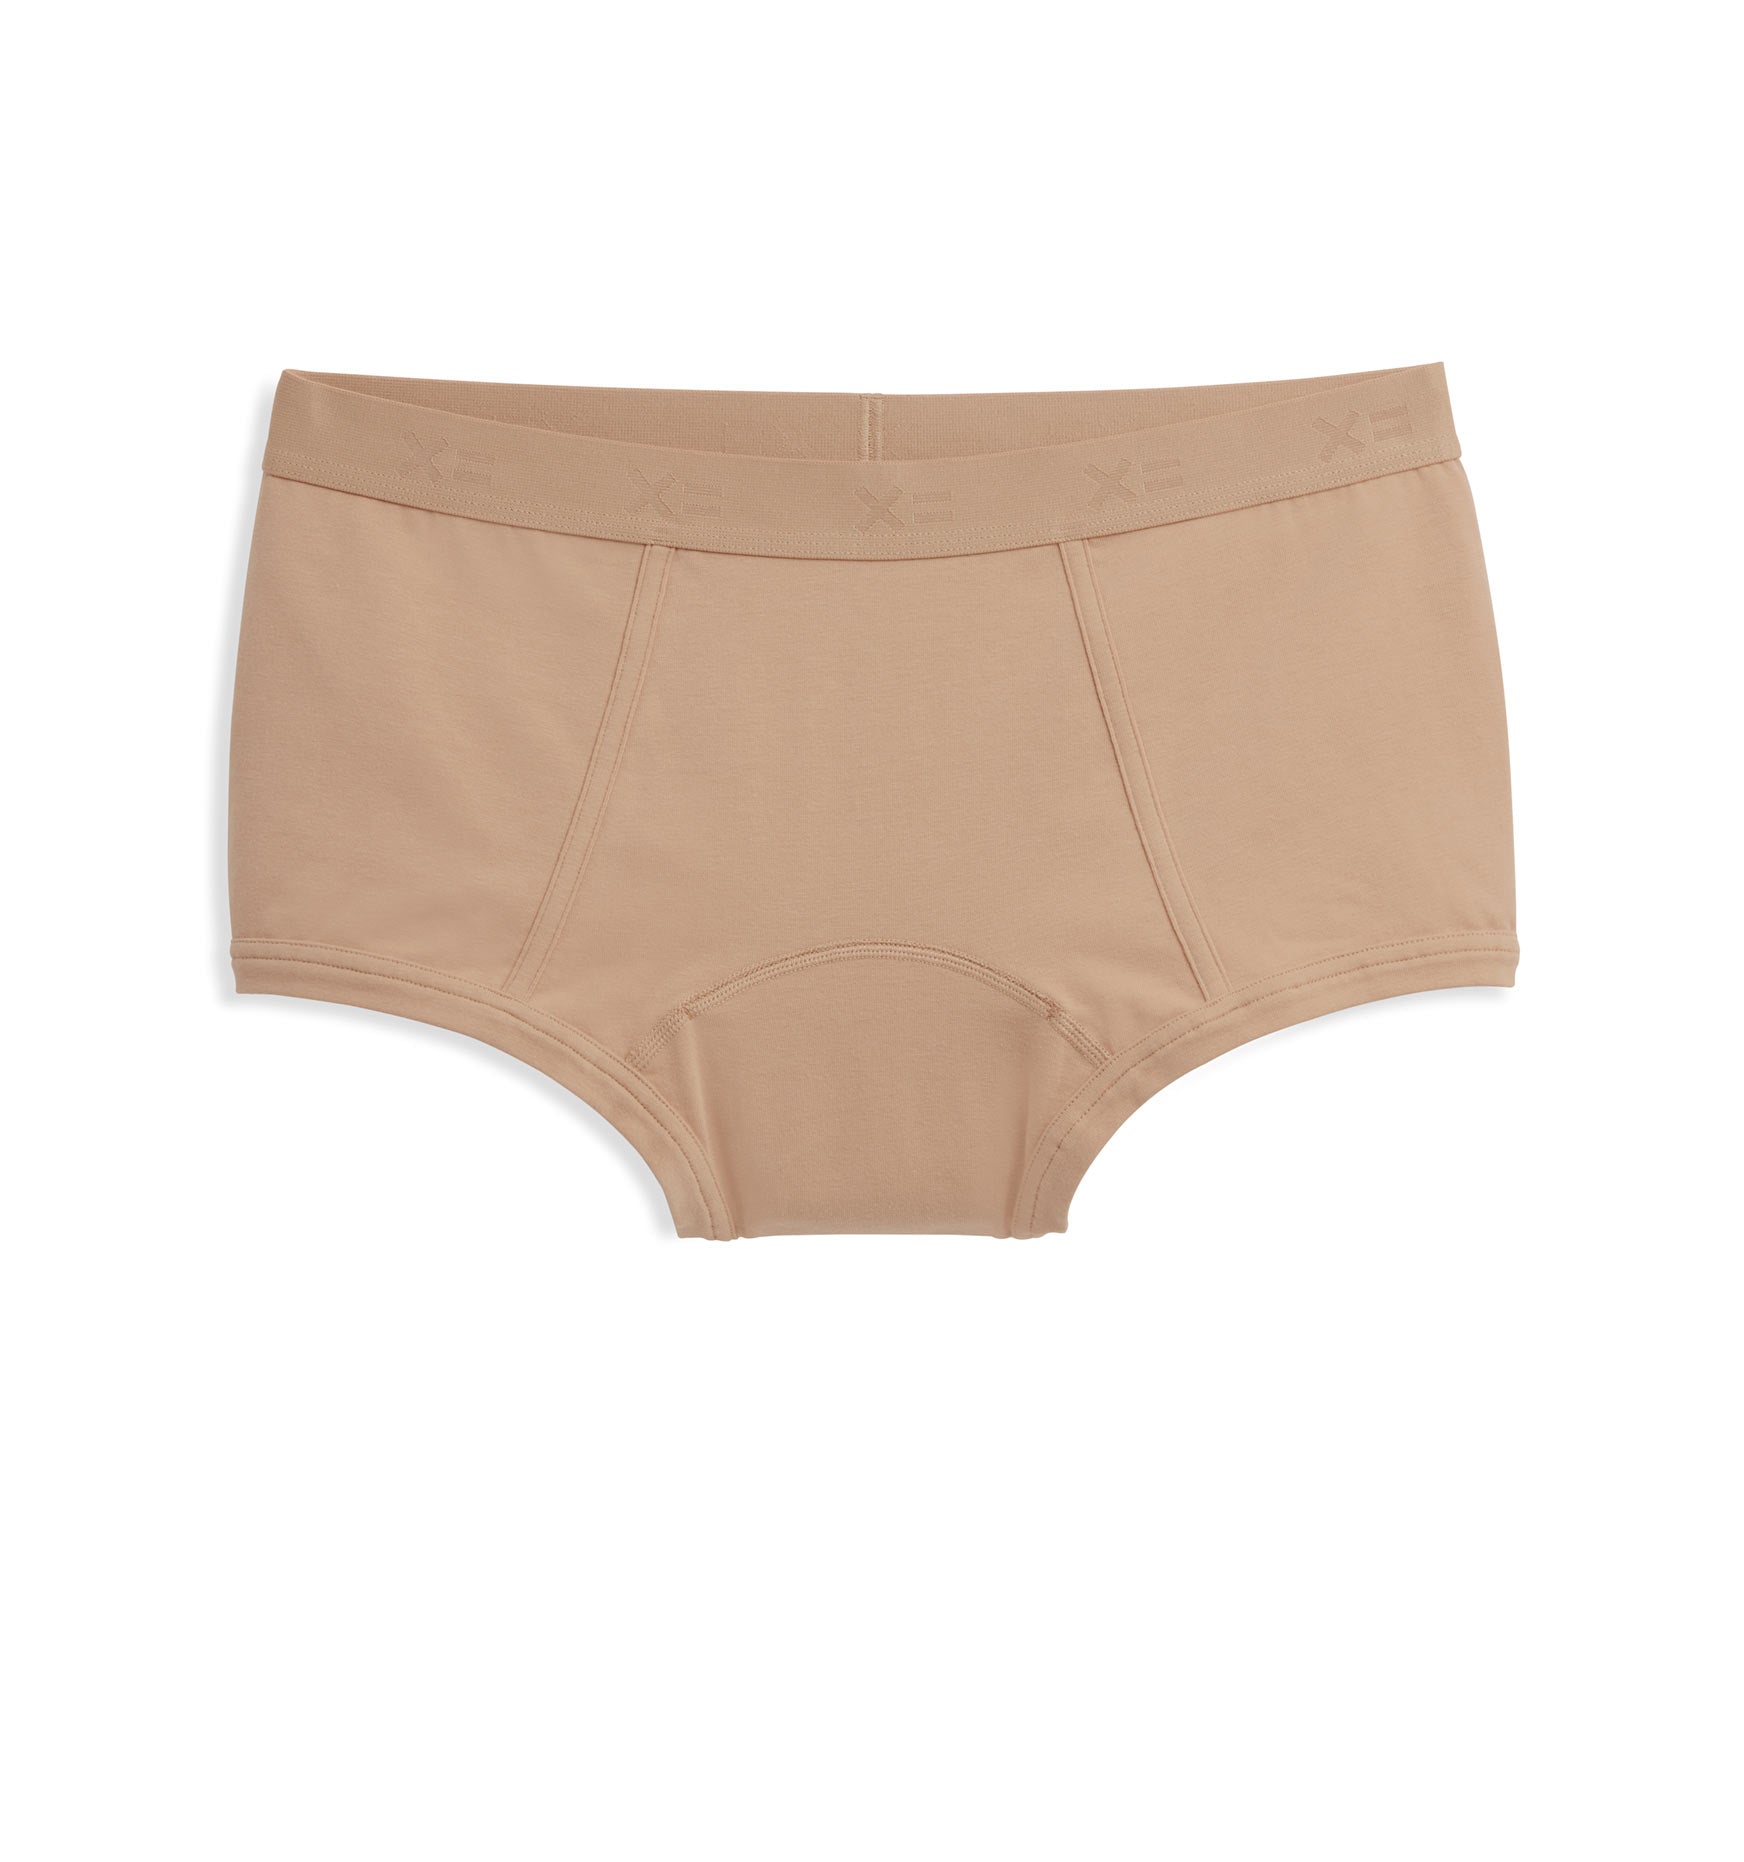 Womens Boy Shorts Underwear Boyshort Panties Ladies Algeria